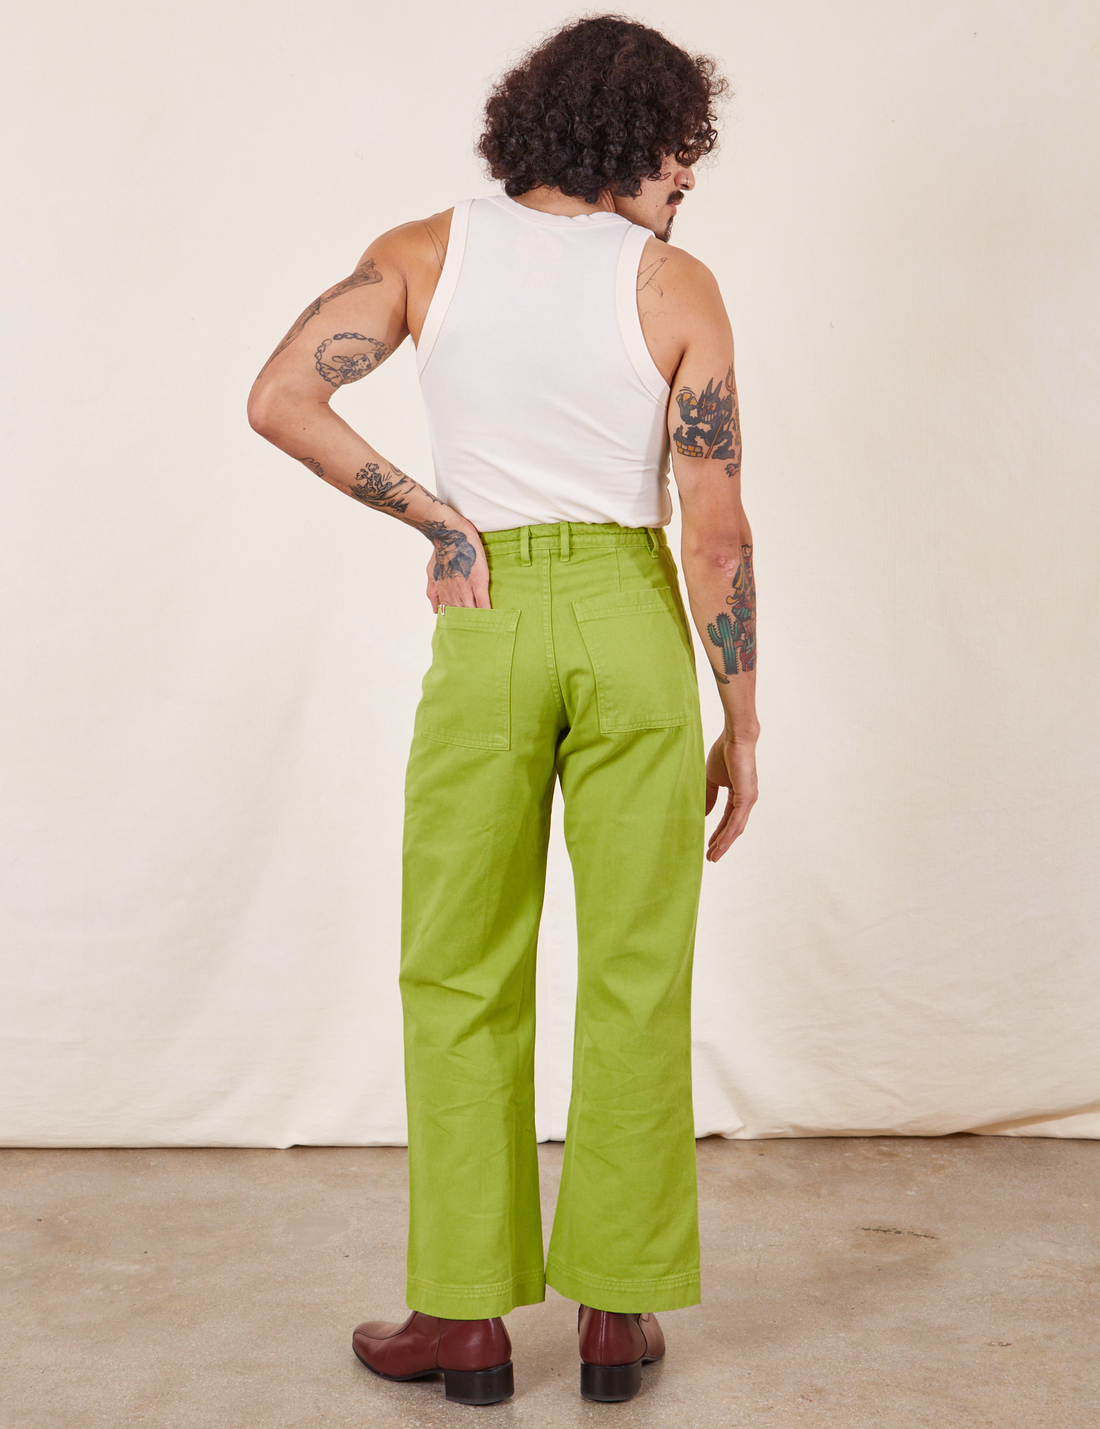 Western Pants in Gross Green back view on Jesse wearing vintage off-white Tank Top